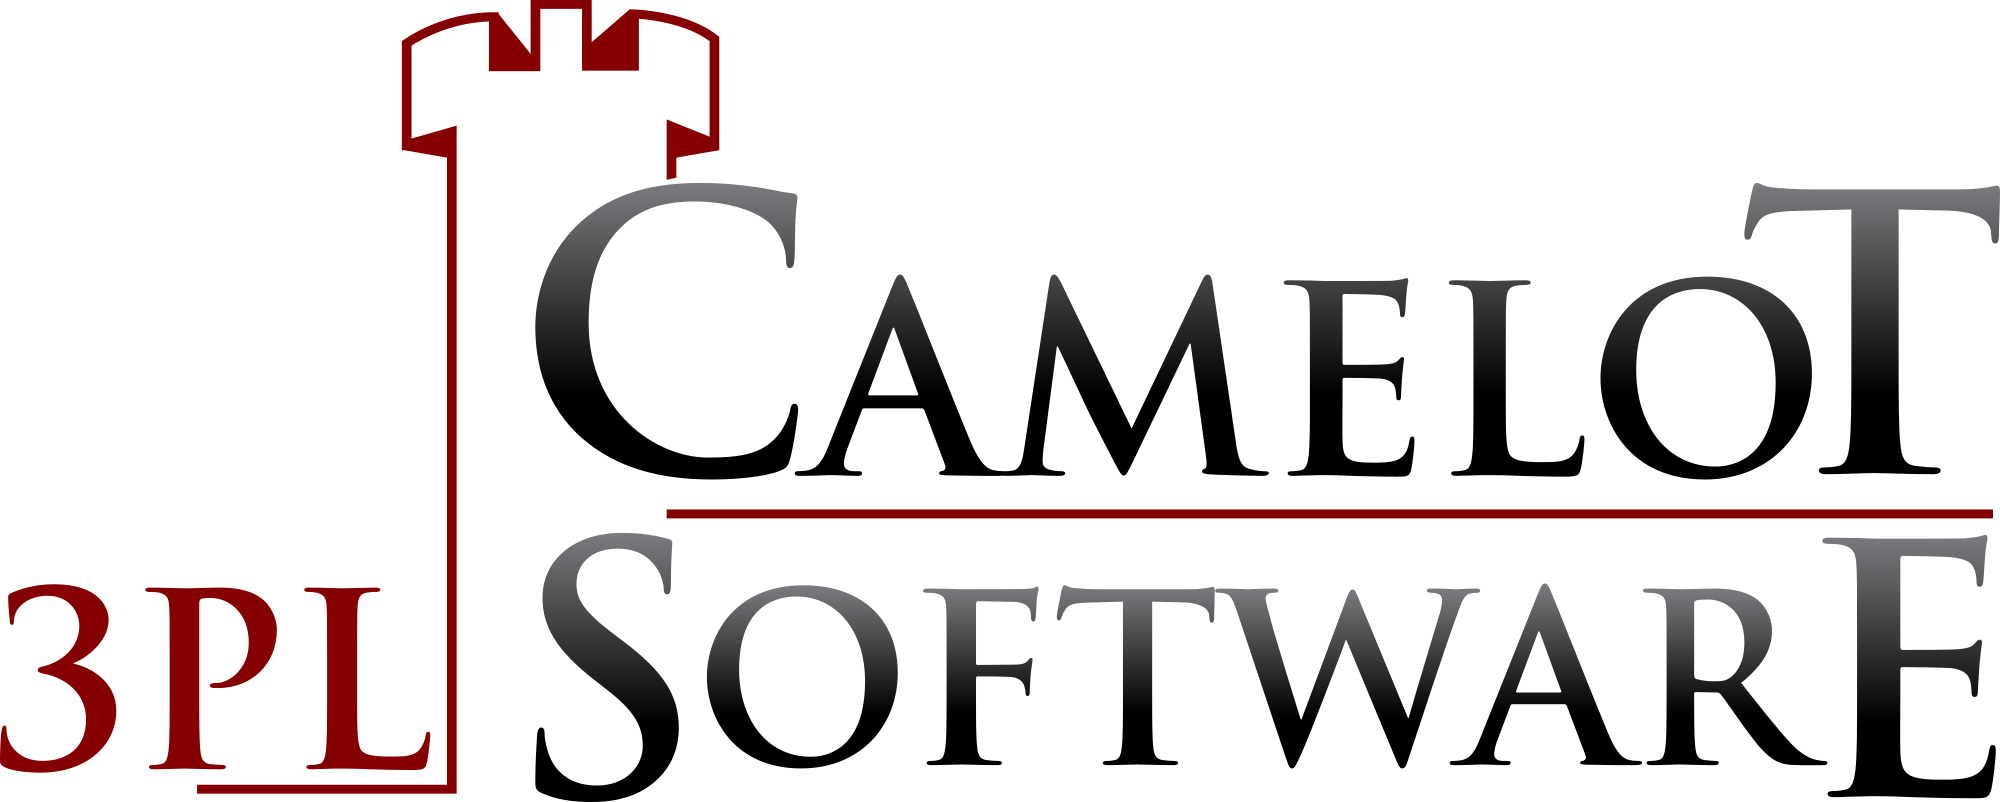 Camelot 3PL Software